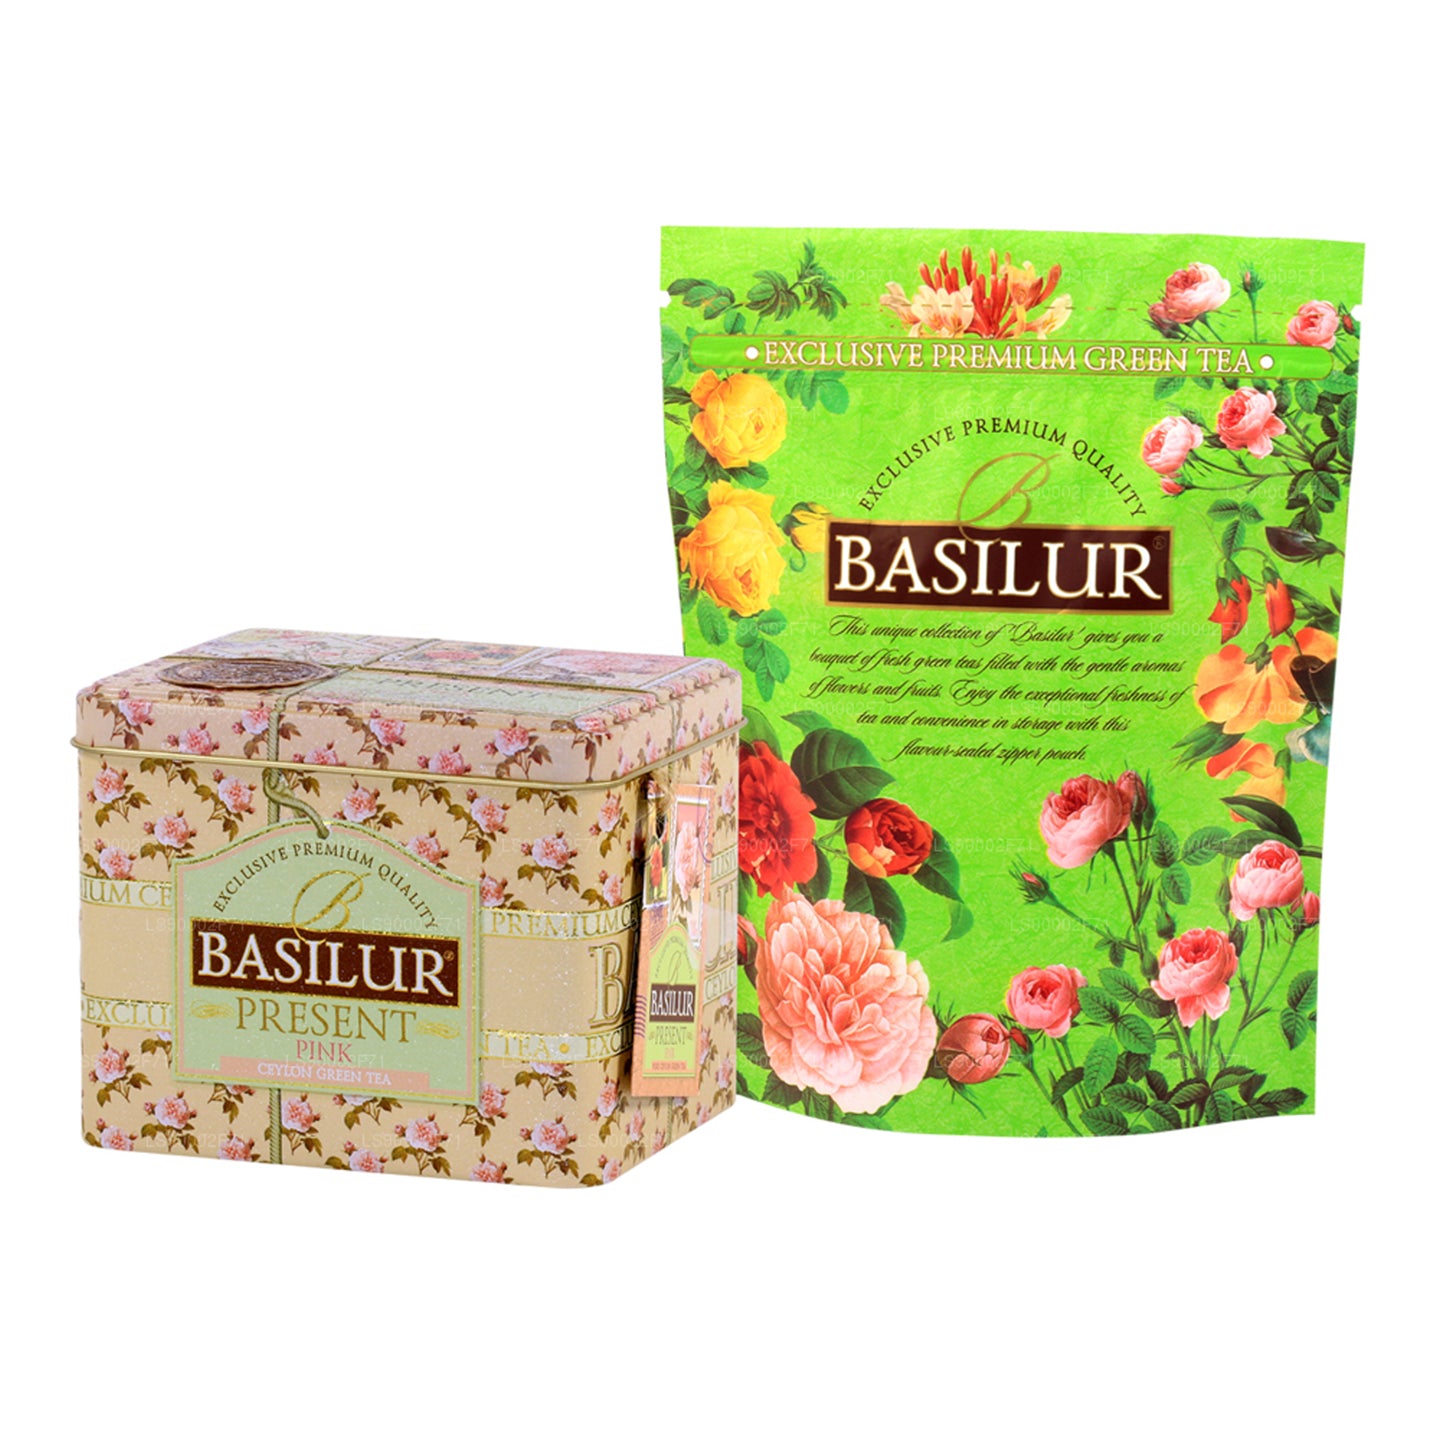 Basilur Present “Pink” (100 g) Caddy